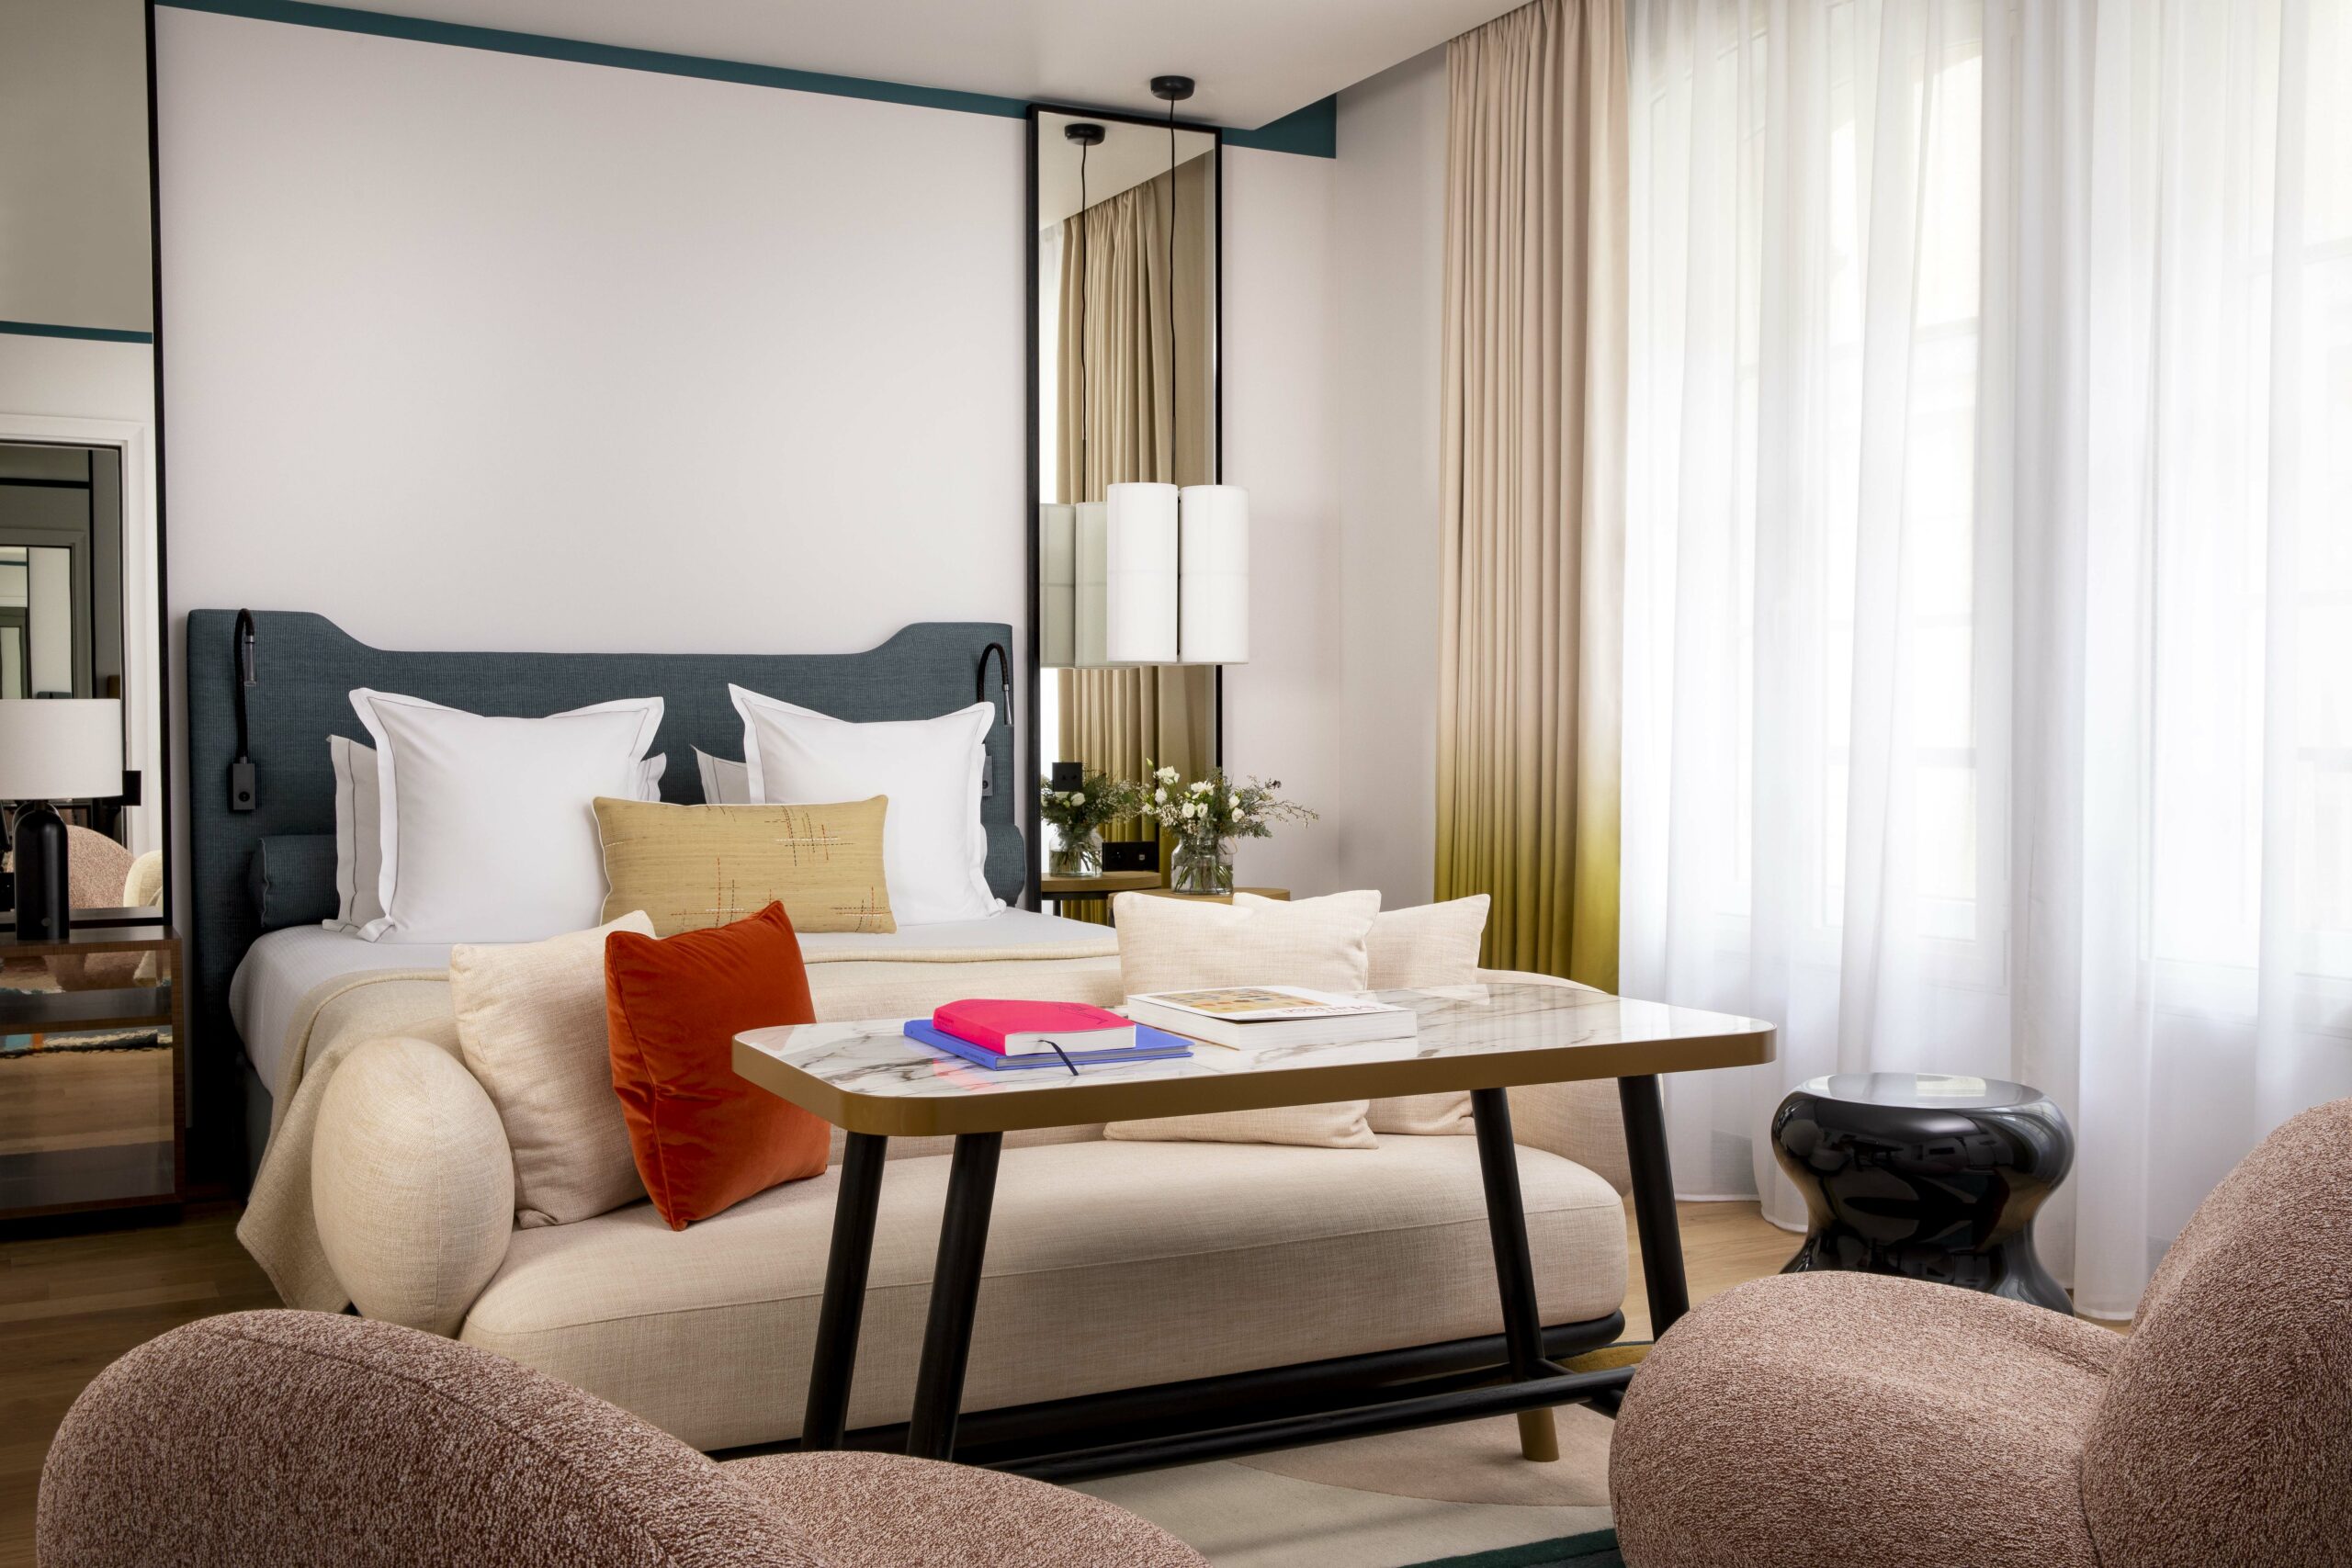 Hotel Bel Ami – apartments – image 7